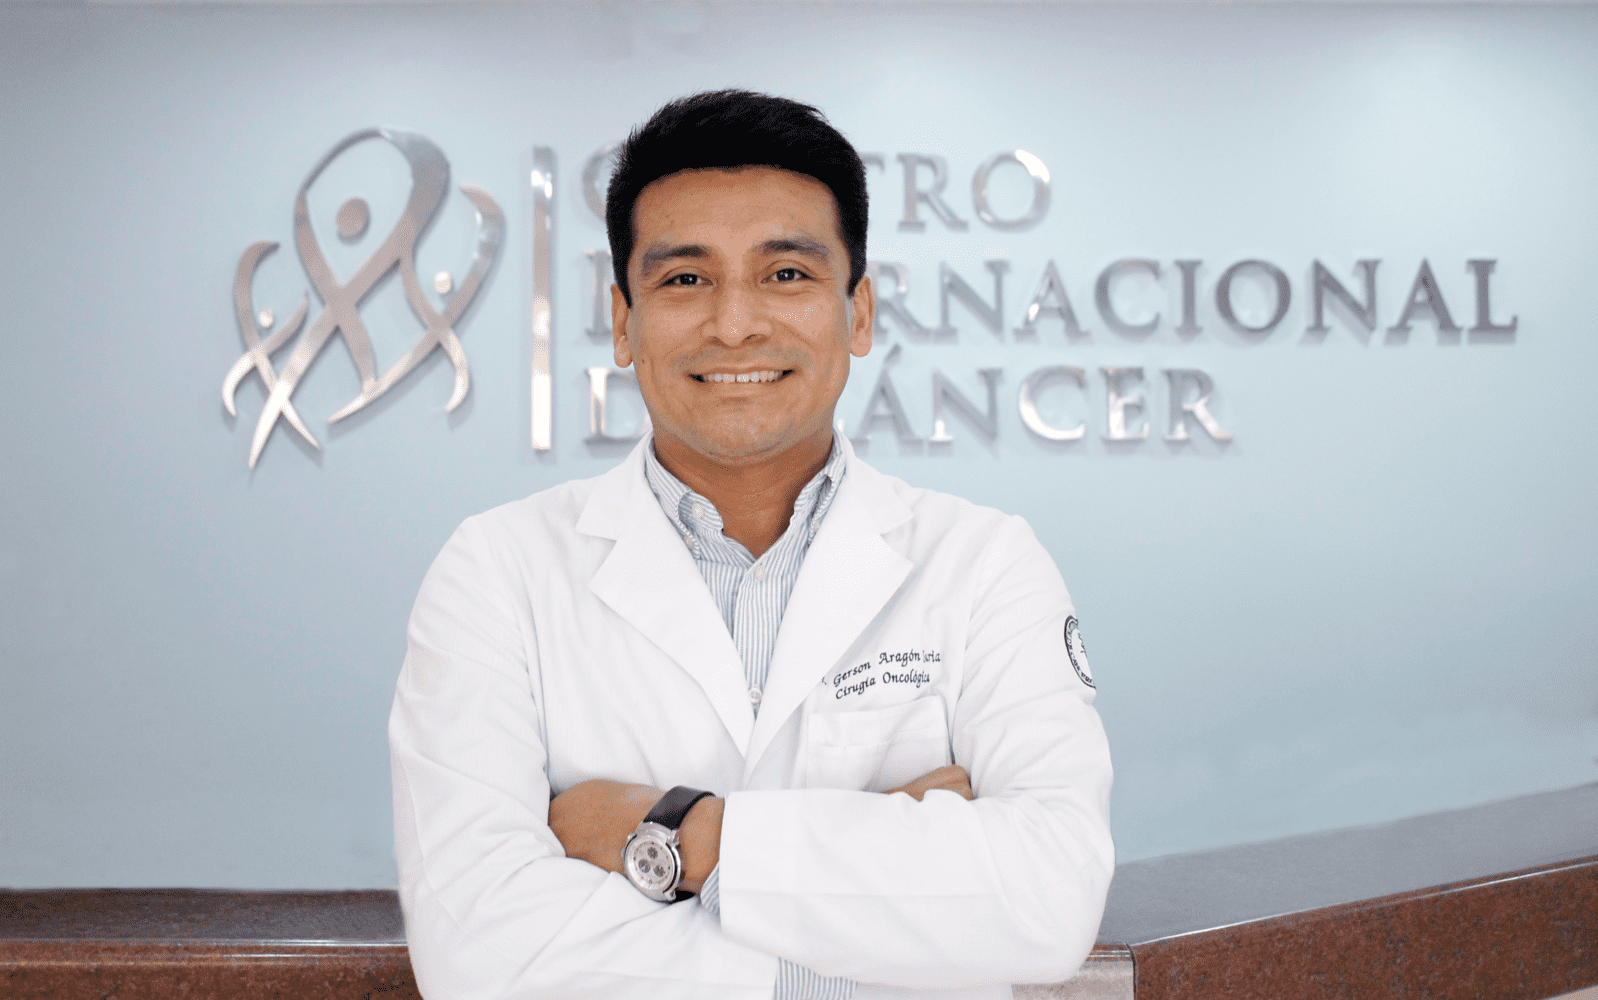 Dr. Gerson Aragon